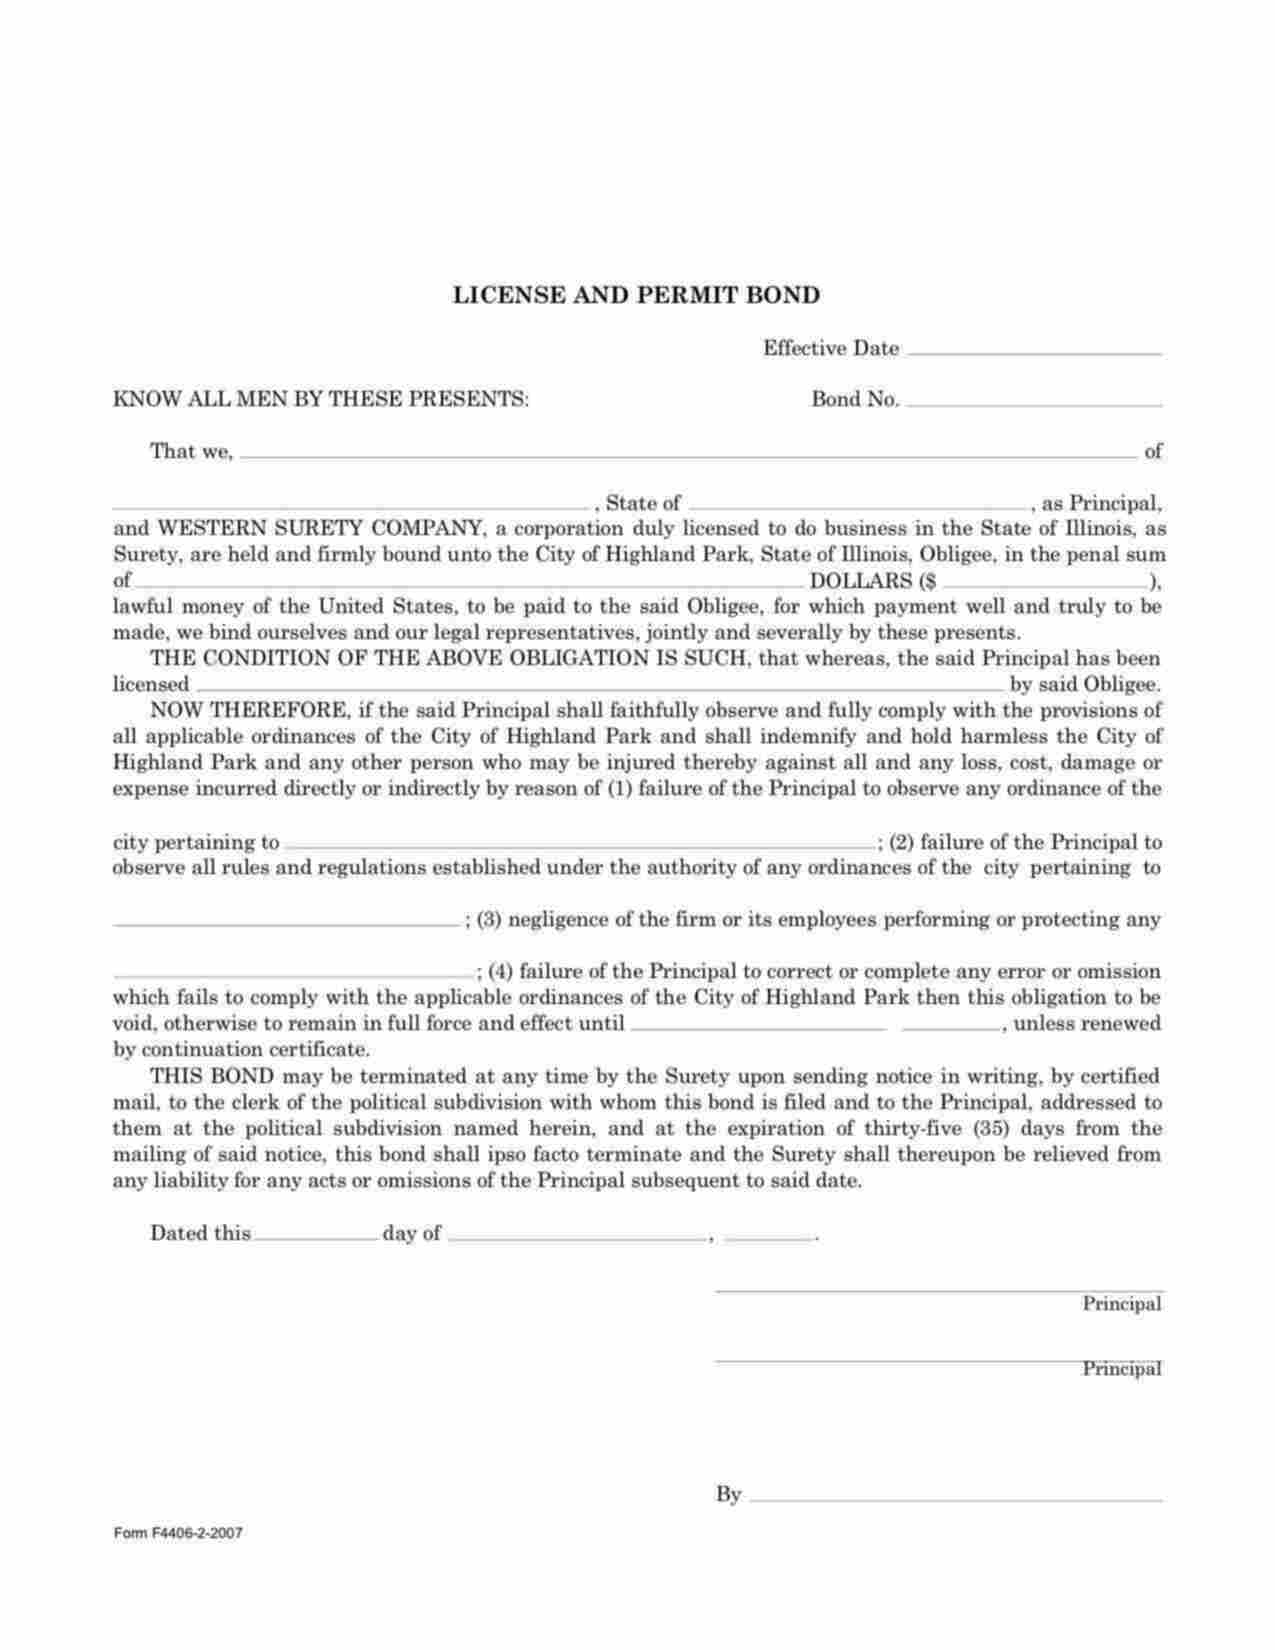 Illinois License and Permit Bond Form